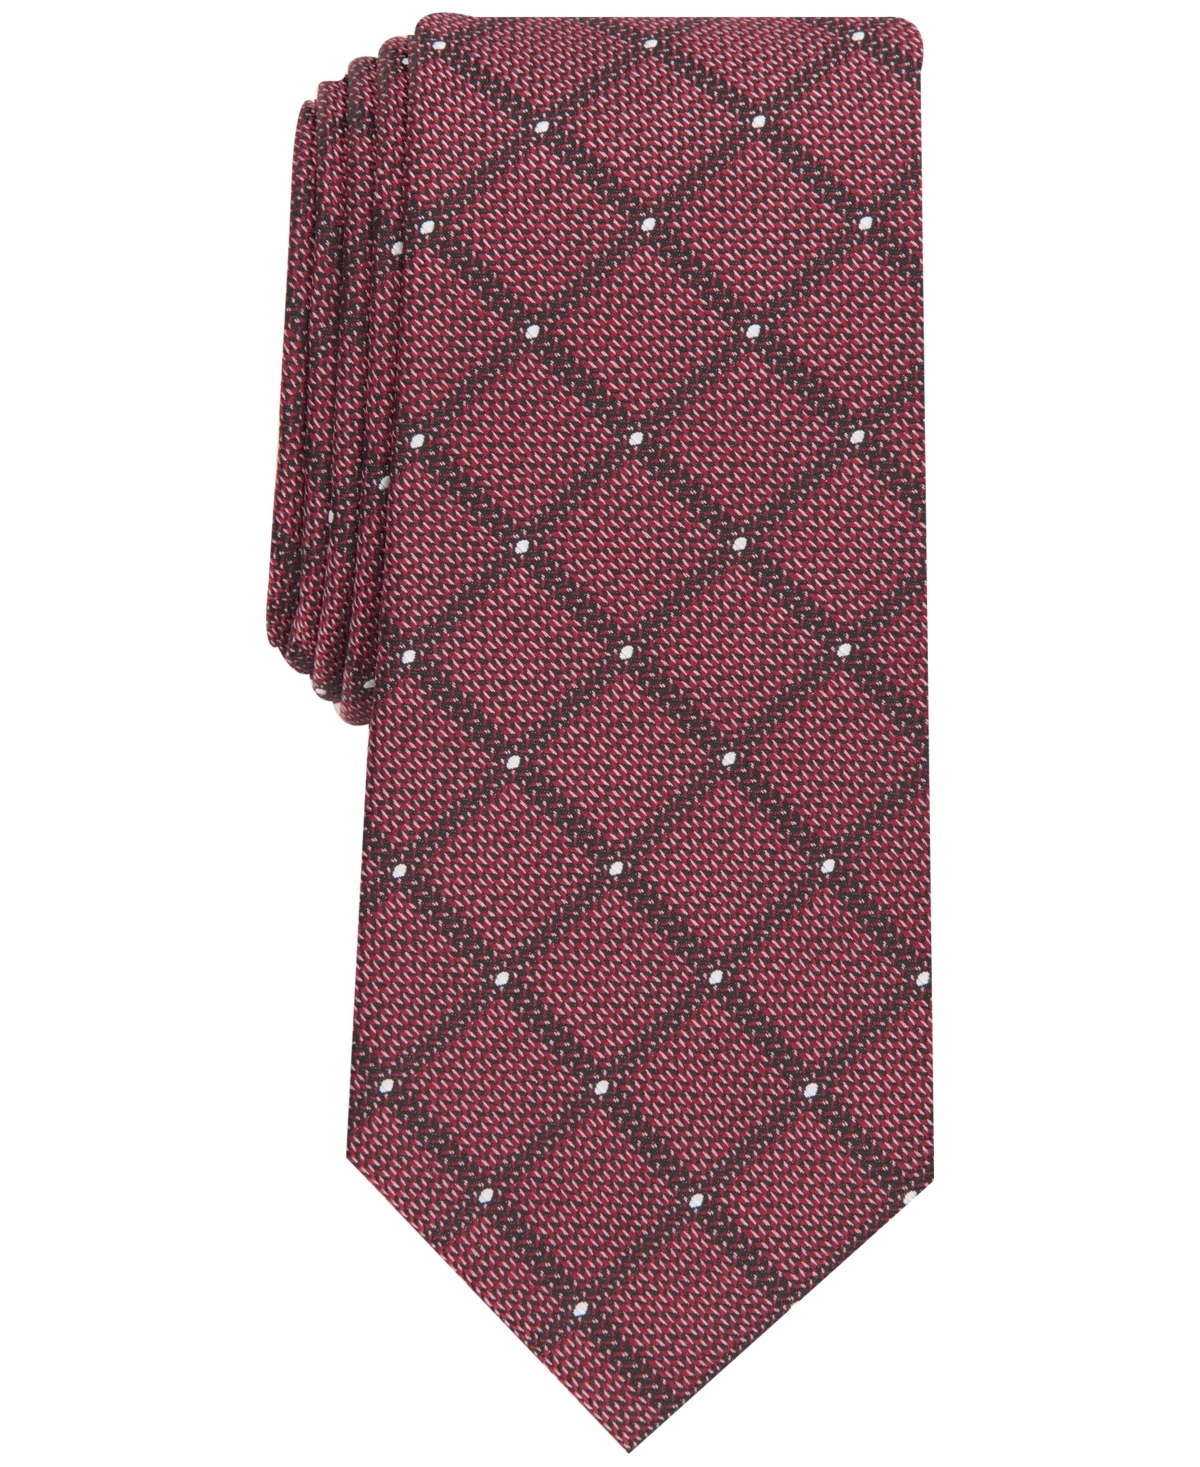 Men's Slim Dot Grid Tie, Created for Macy's - Red